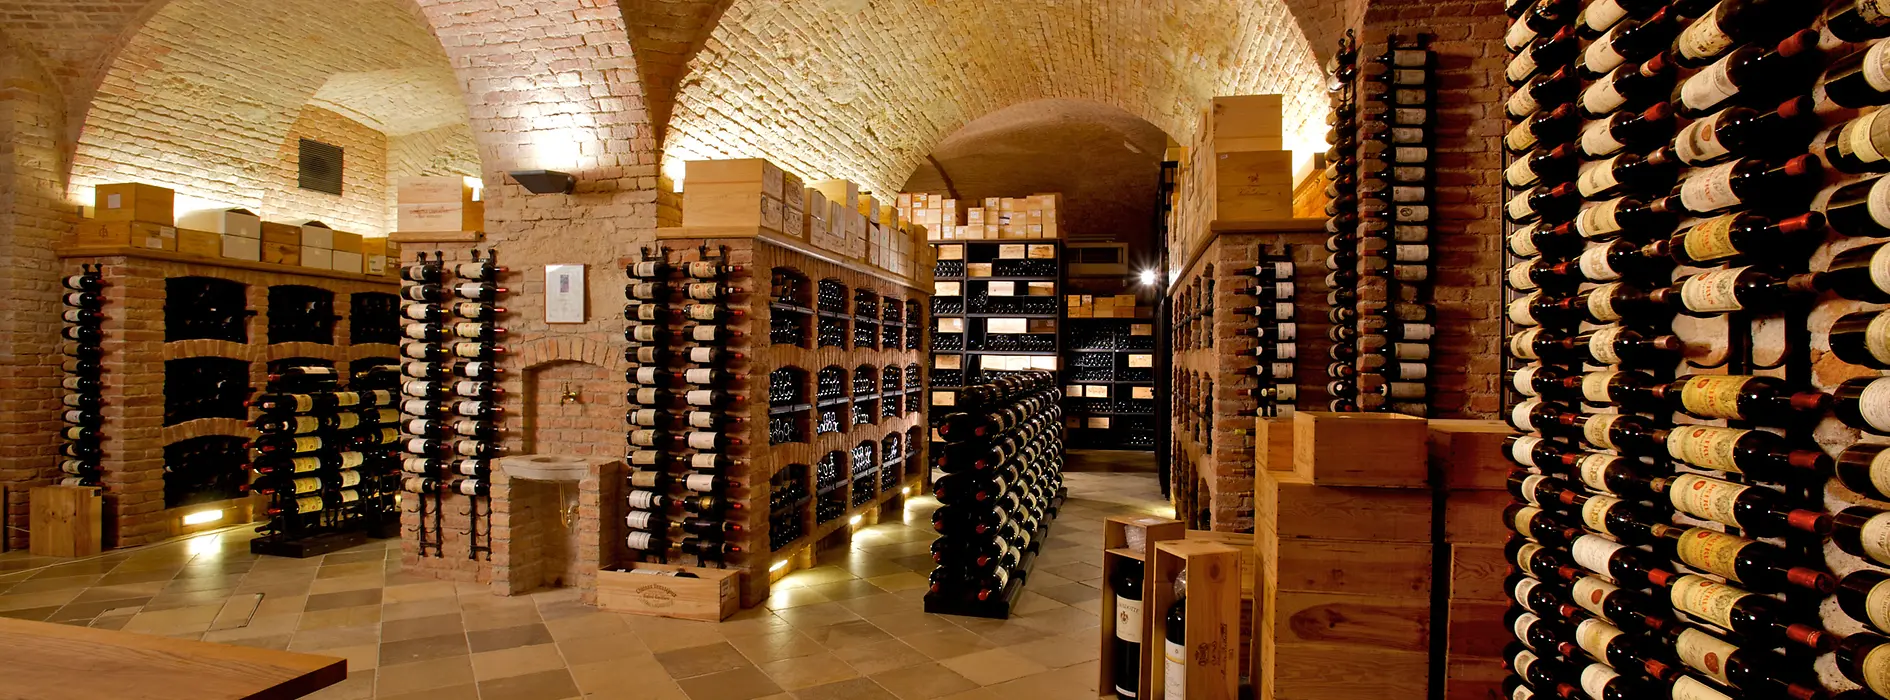 Vine cellar at Palais Coburg